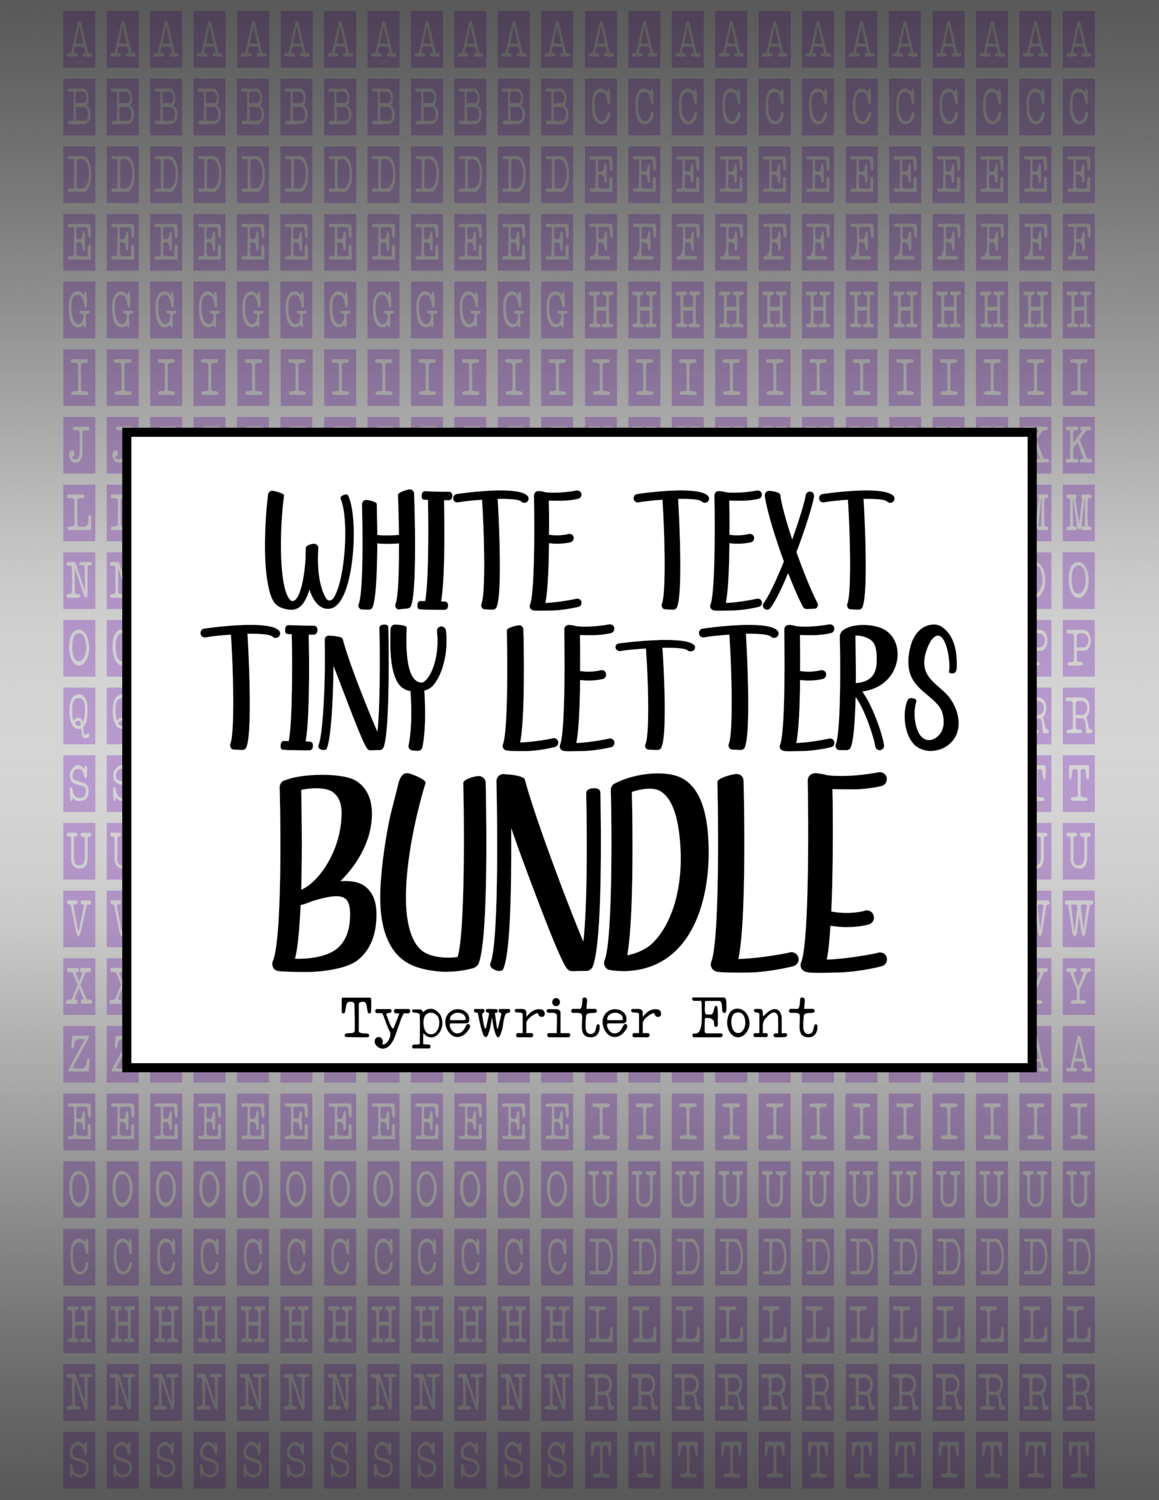 Bundle #84 'Typewriter' Tiny Letters - White Text